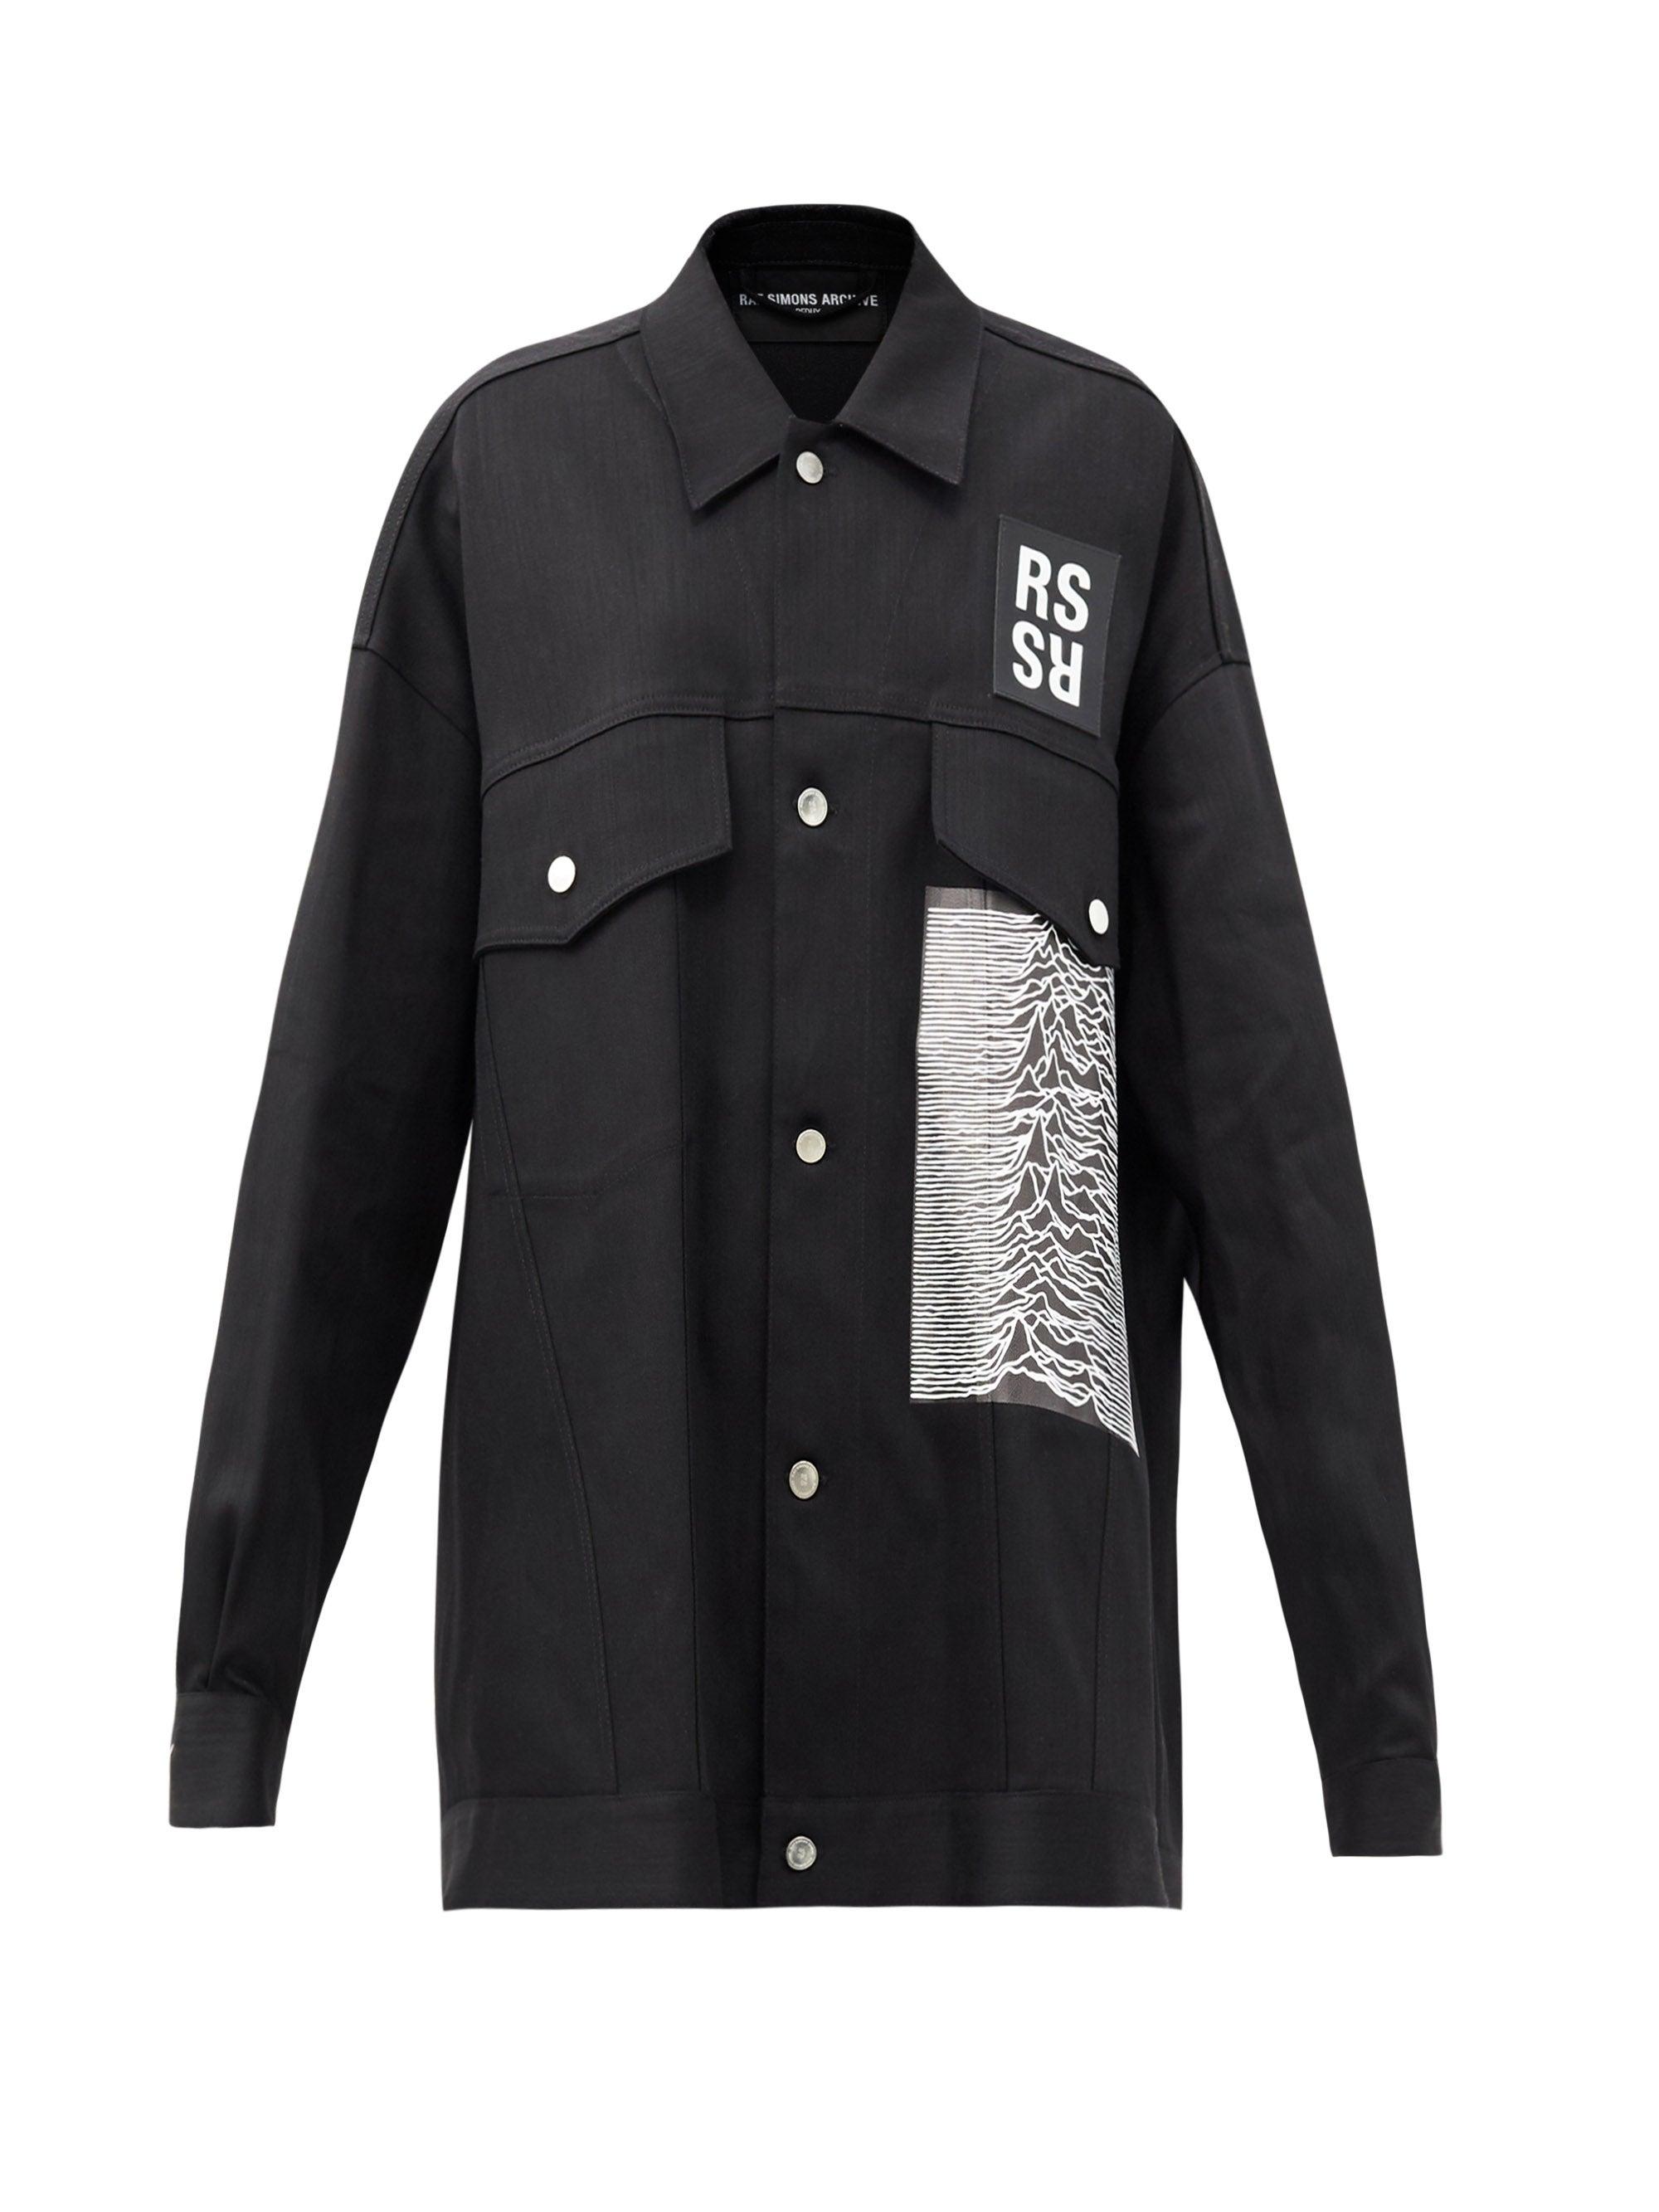 Raf Simons Ss18 Joy Division-print Denim Jacket in Black - Lyst